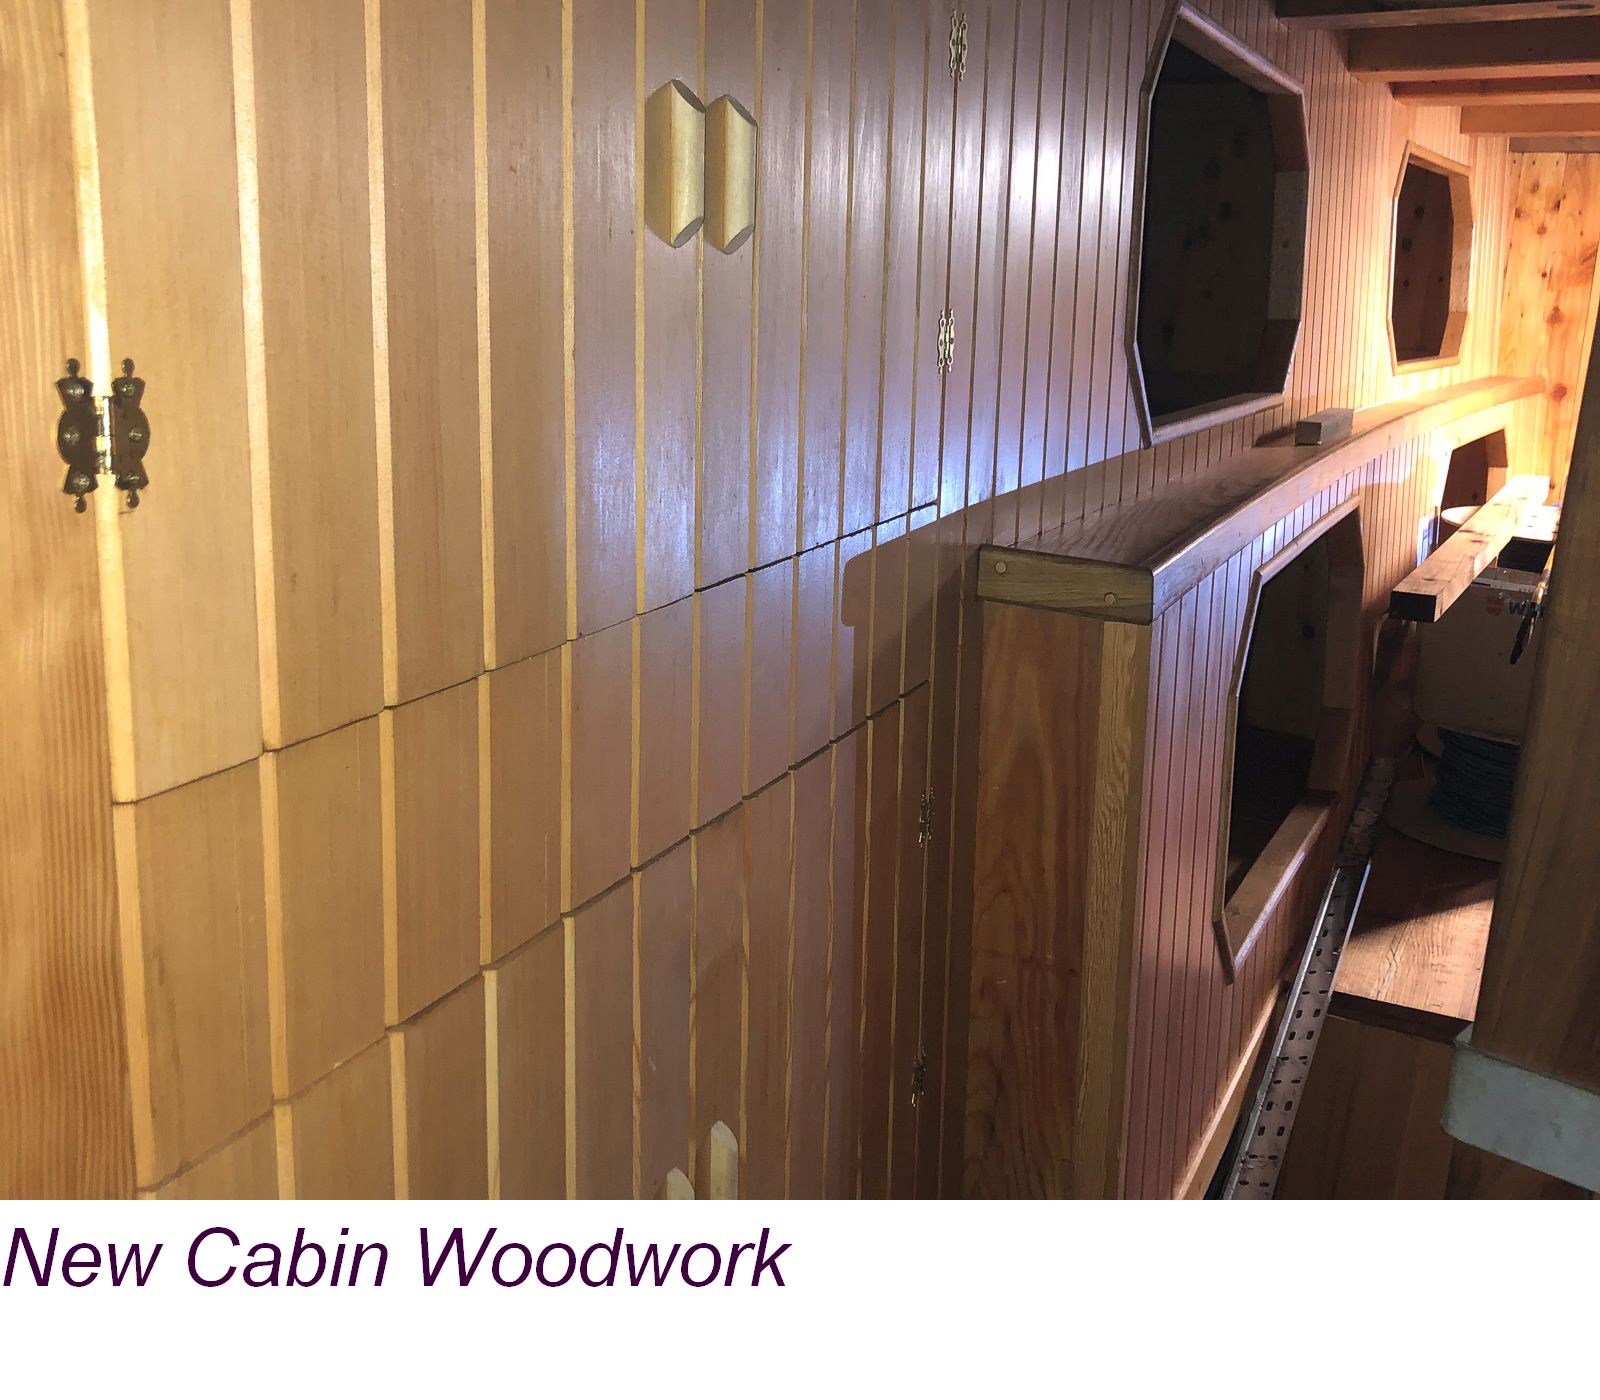 Cabin woodwork